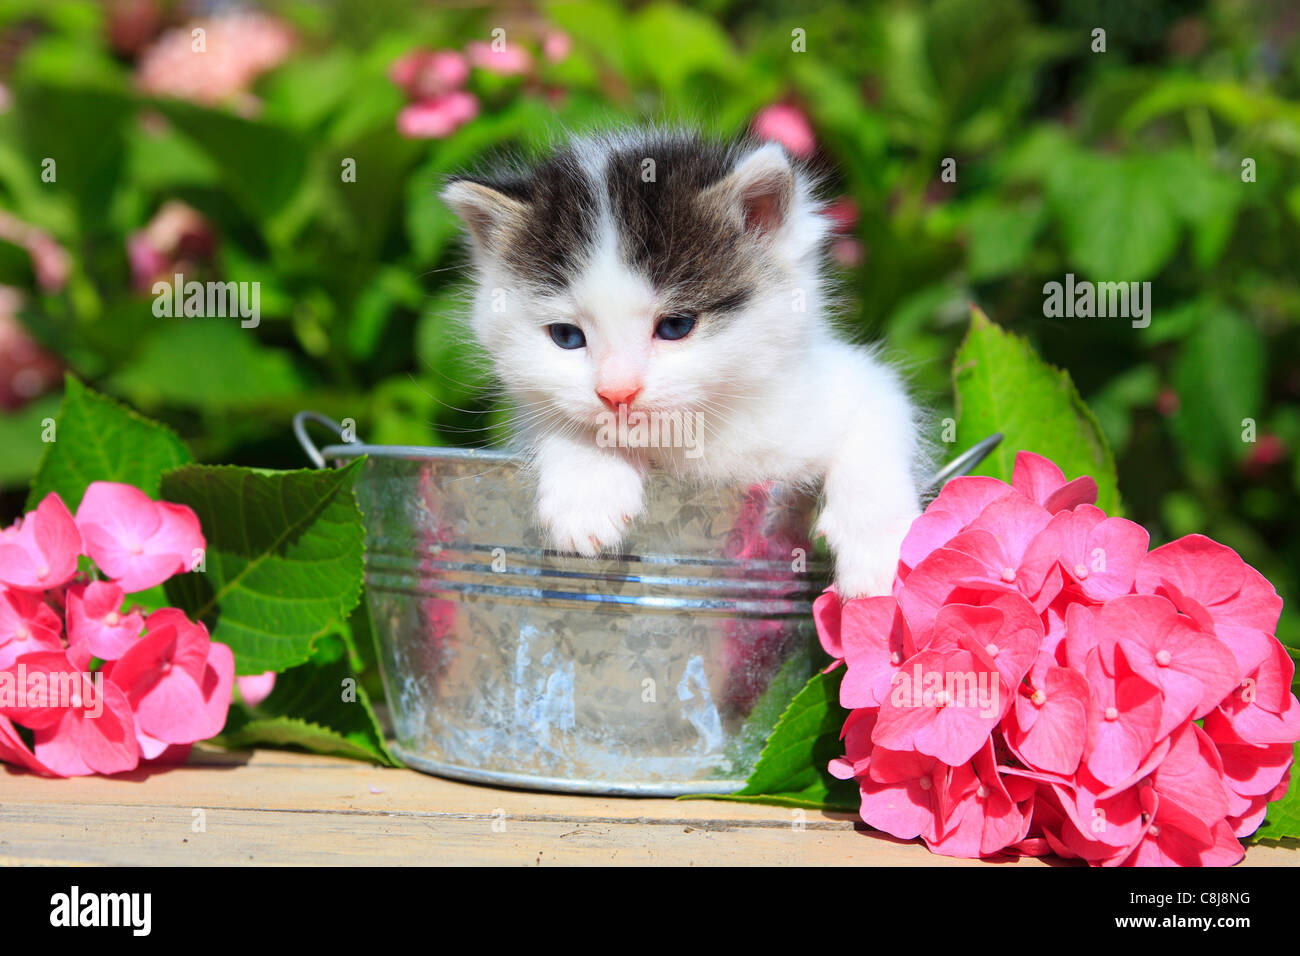 3 weeks, flower, flowers, garden, house, home, Animal, domestic animal, pet, young, cat, jug, kitten, tiger, Tigerli, vase, tub, Stock Photo